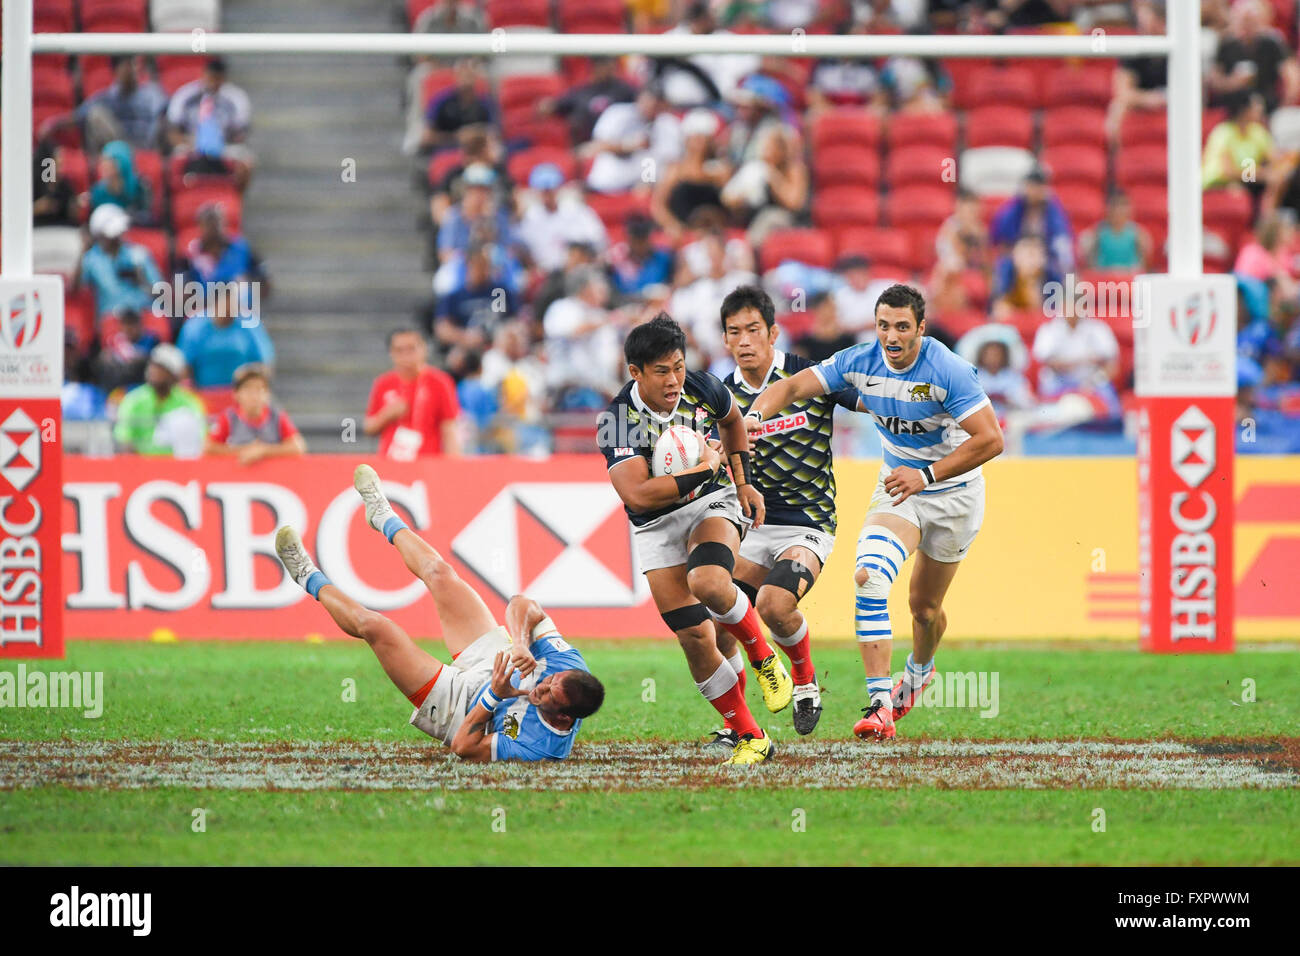 Yoshitaka Tokunaga (JPN), APRL 16, 2016 - Rugby : HSBC Sevens World Series, Singapore Sevens match Japan and Argentina at National Stadium in Singapore. (Photo by Haruhiko Otsuka/AFLO) Stock Photo